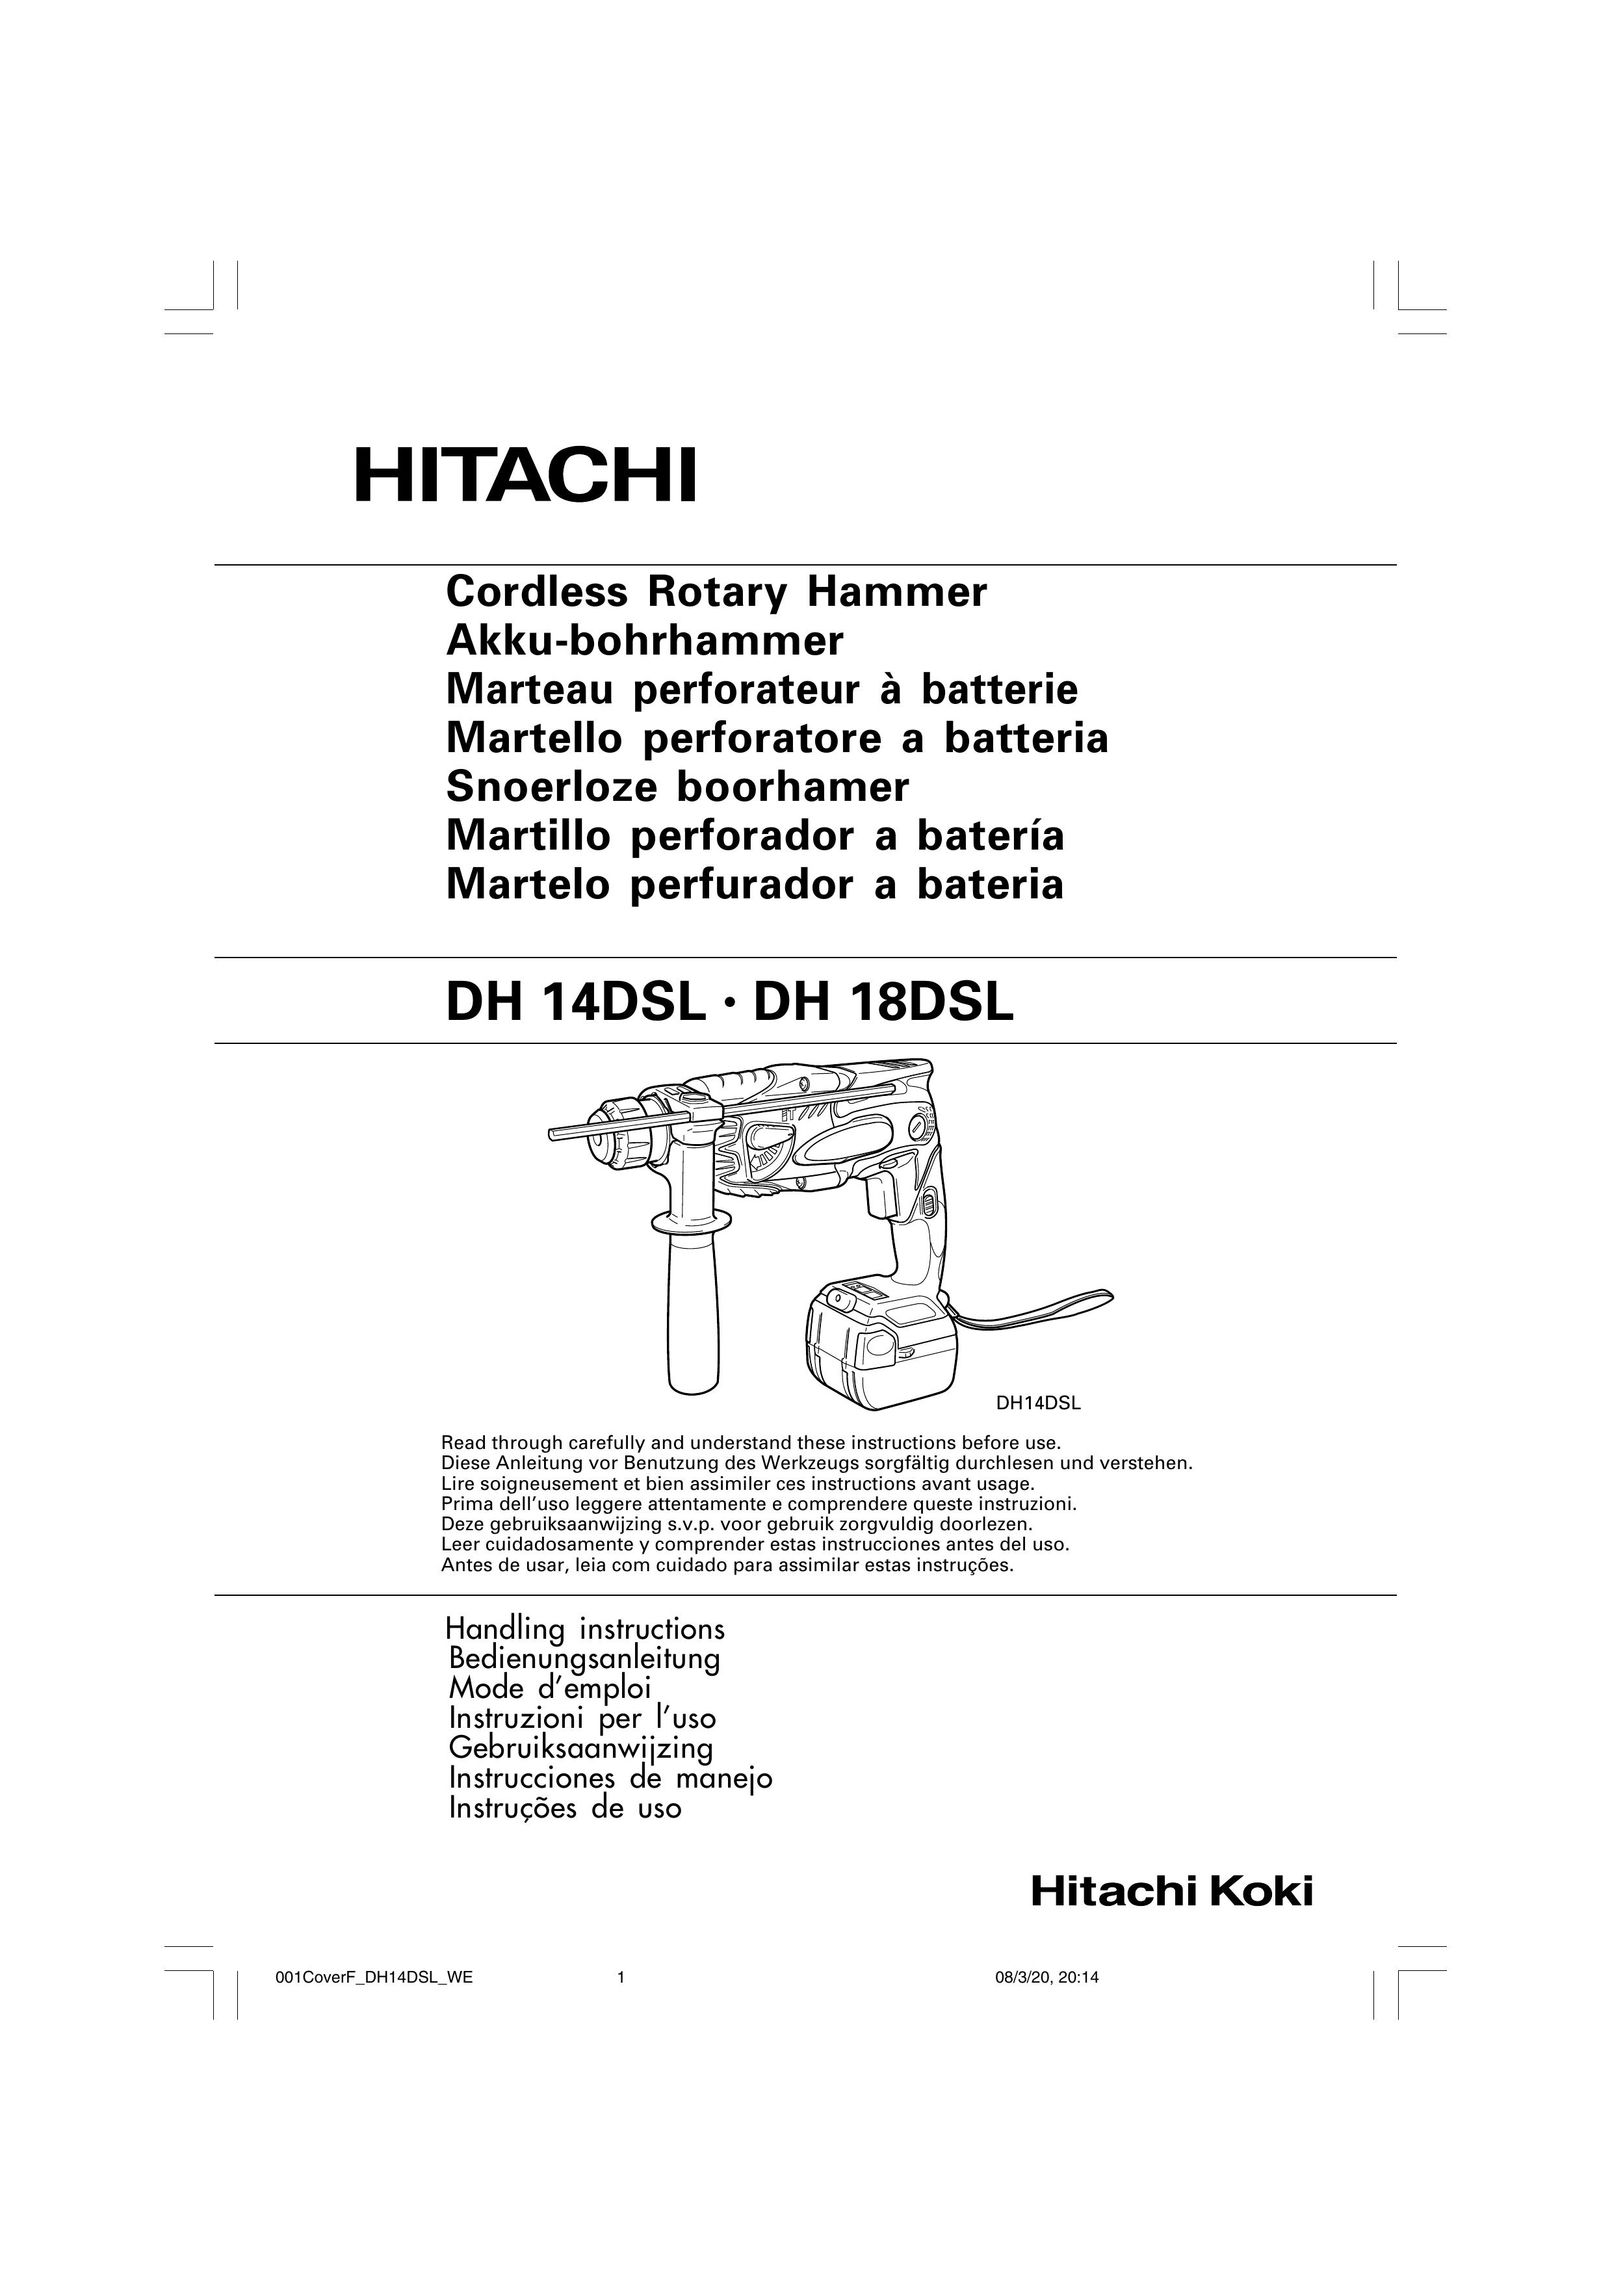 Hitachi Koki USA DH18DSLP4 Power Hammer User Manual